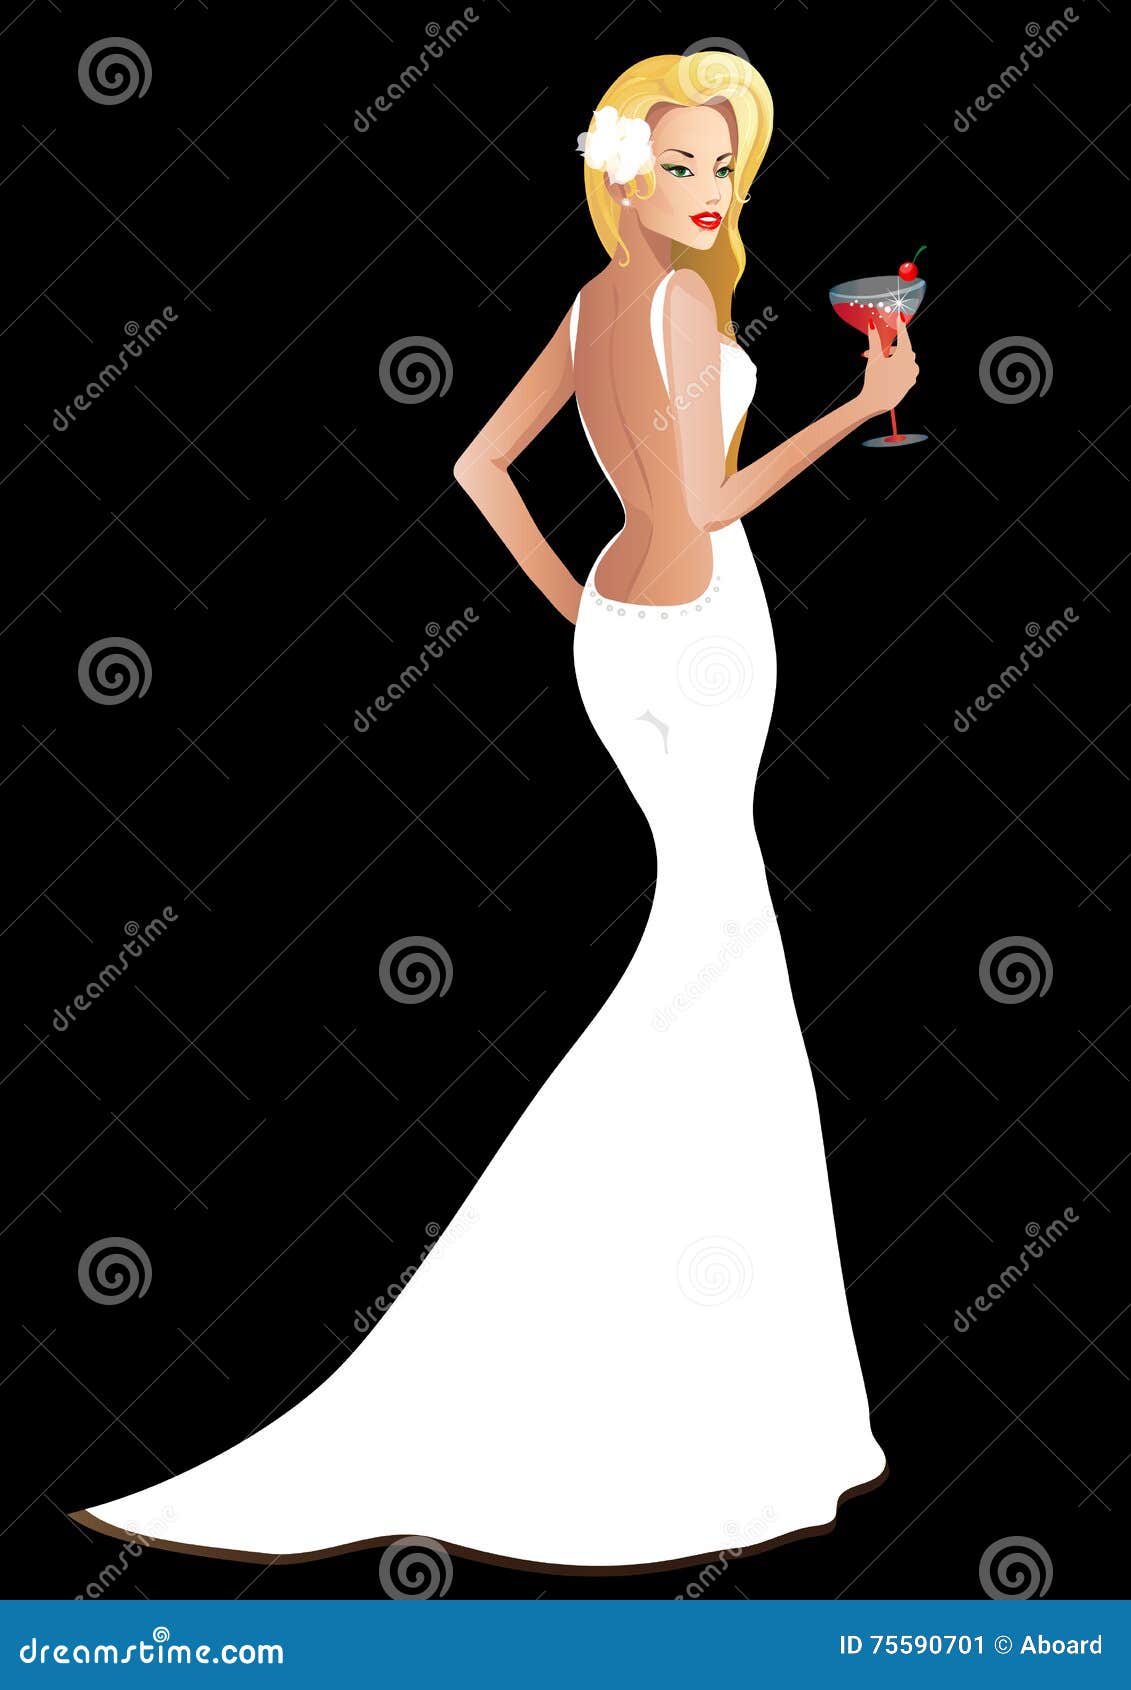 Wedding white dress, bride stock illustration. Illustration of